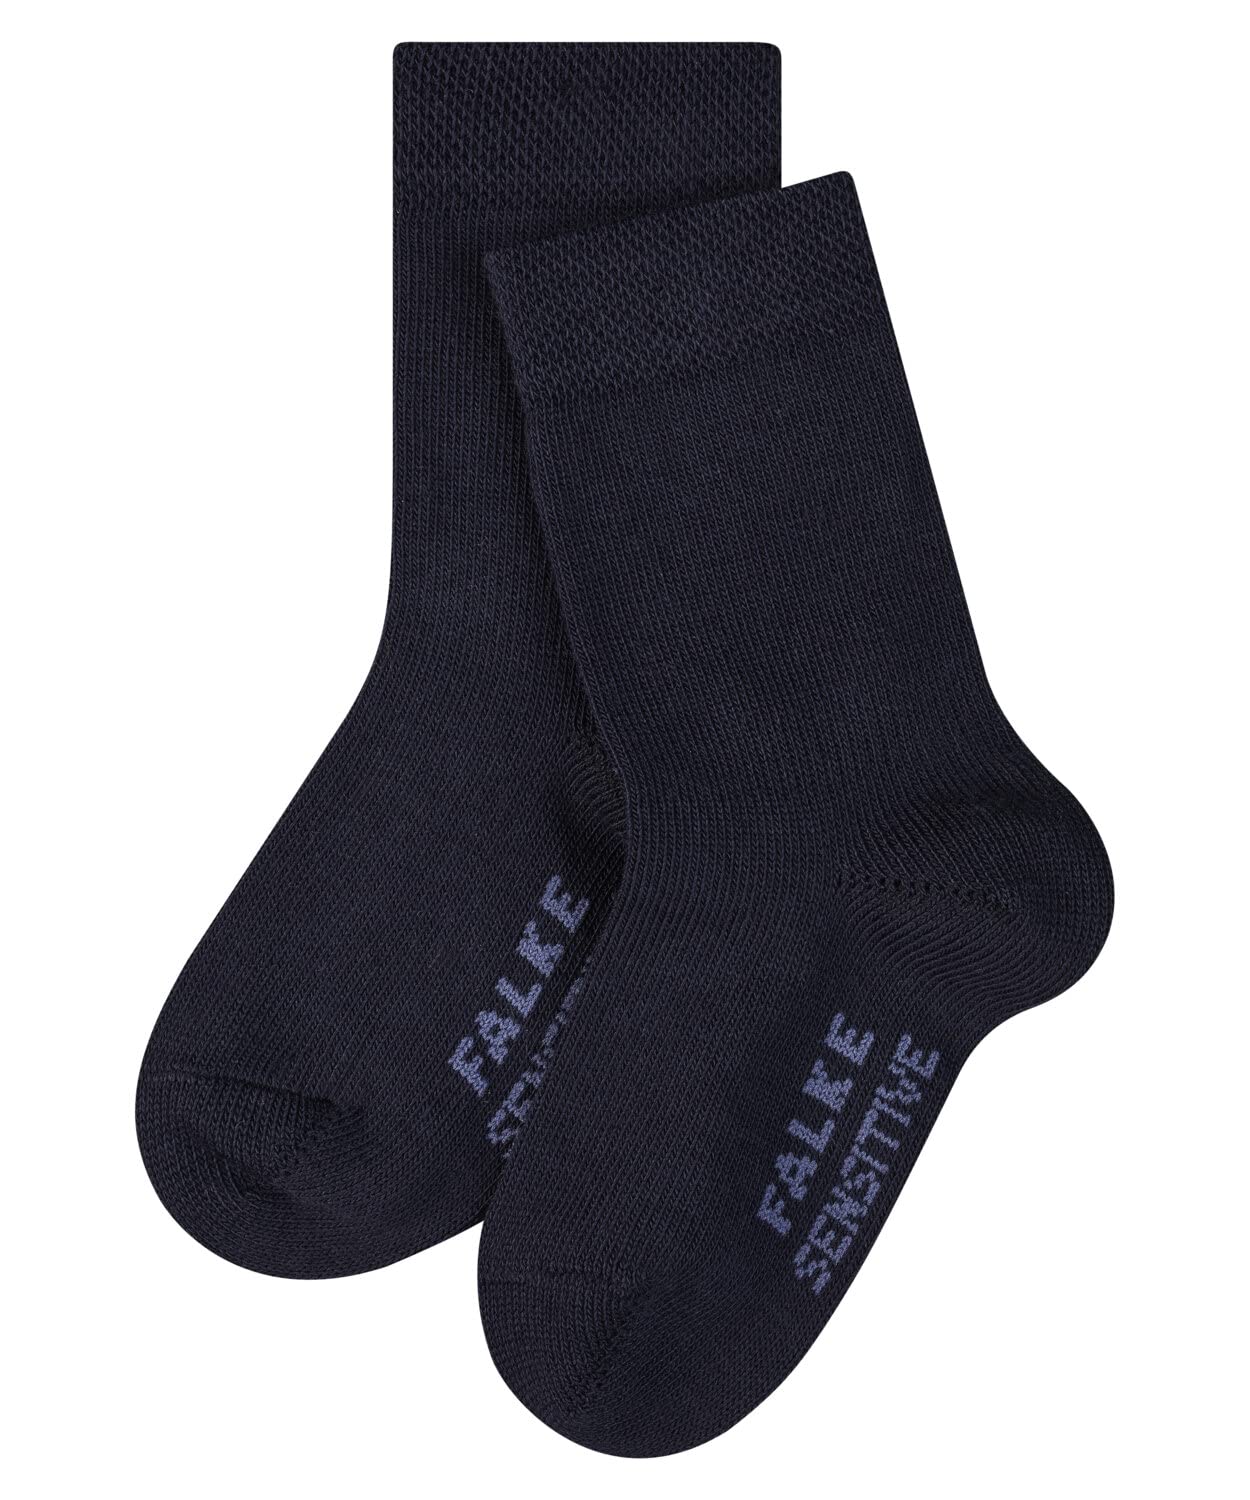 Falke 4 Grip Review - Grip Socks Review 